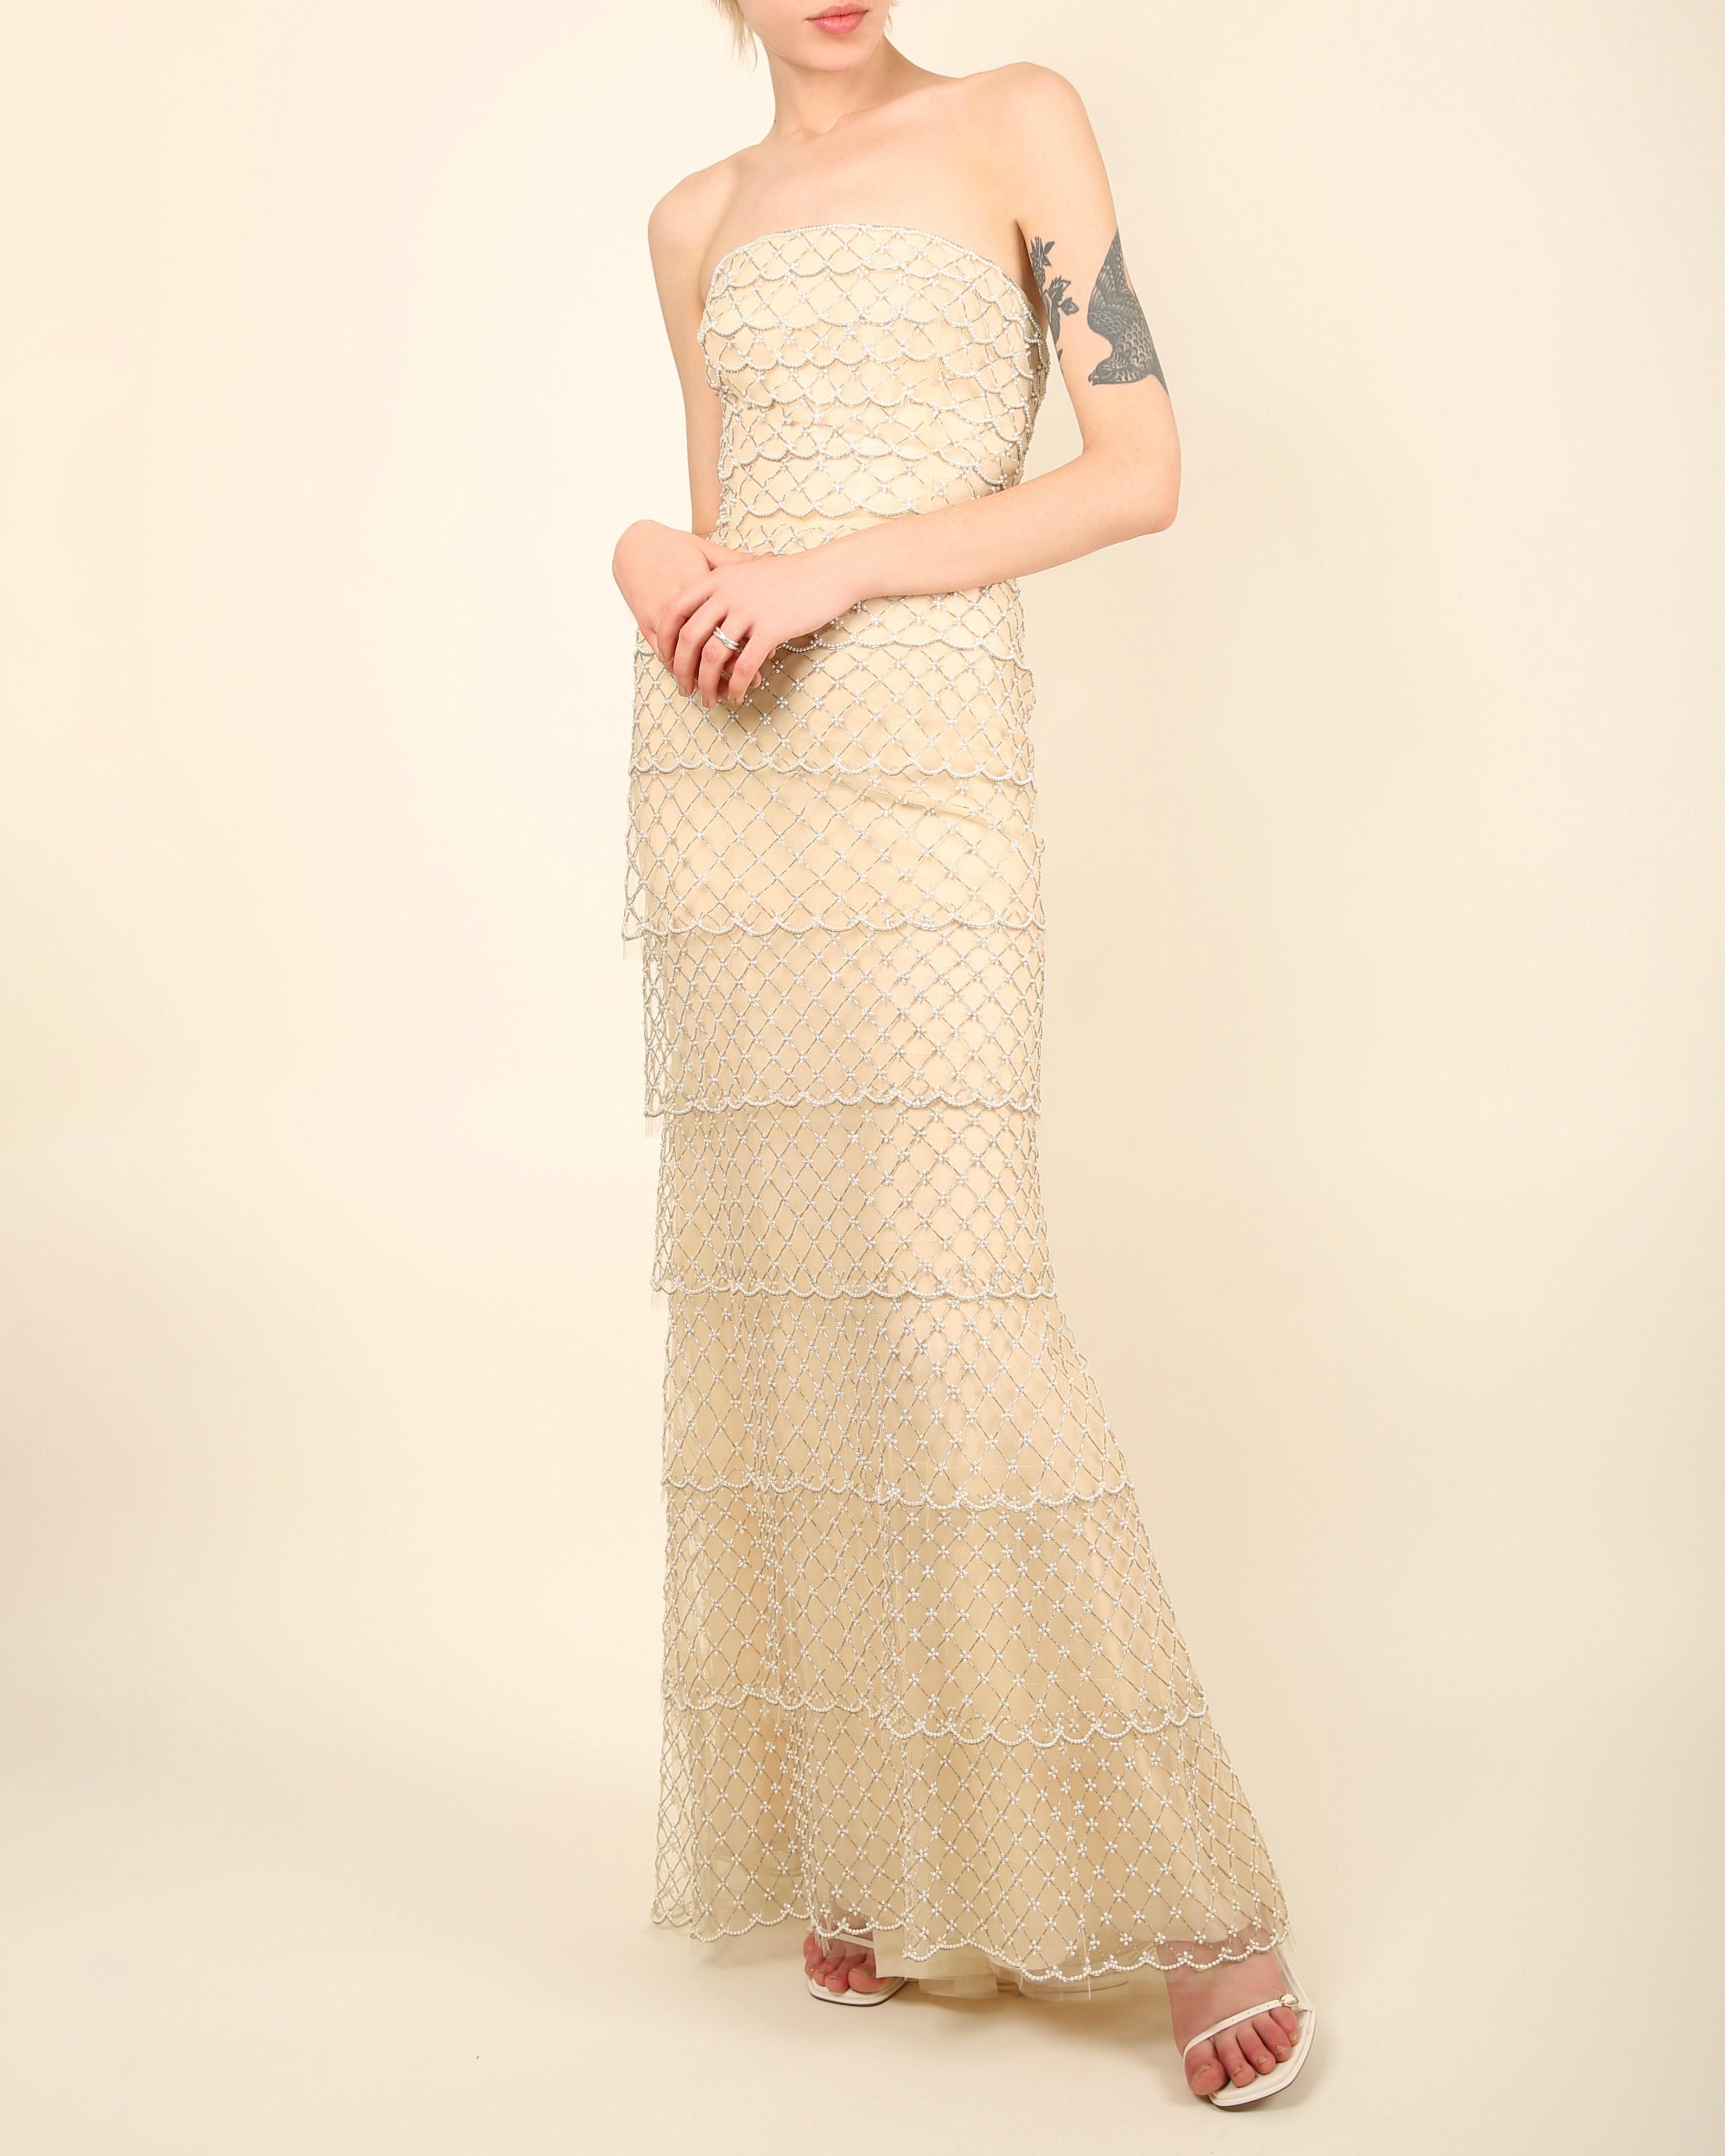 Beige Oscar de la Renta S/S 2014 strapless tiered sheer mesh pearl wedding dress gown